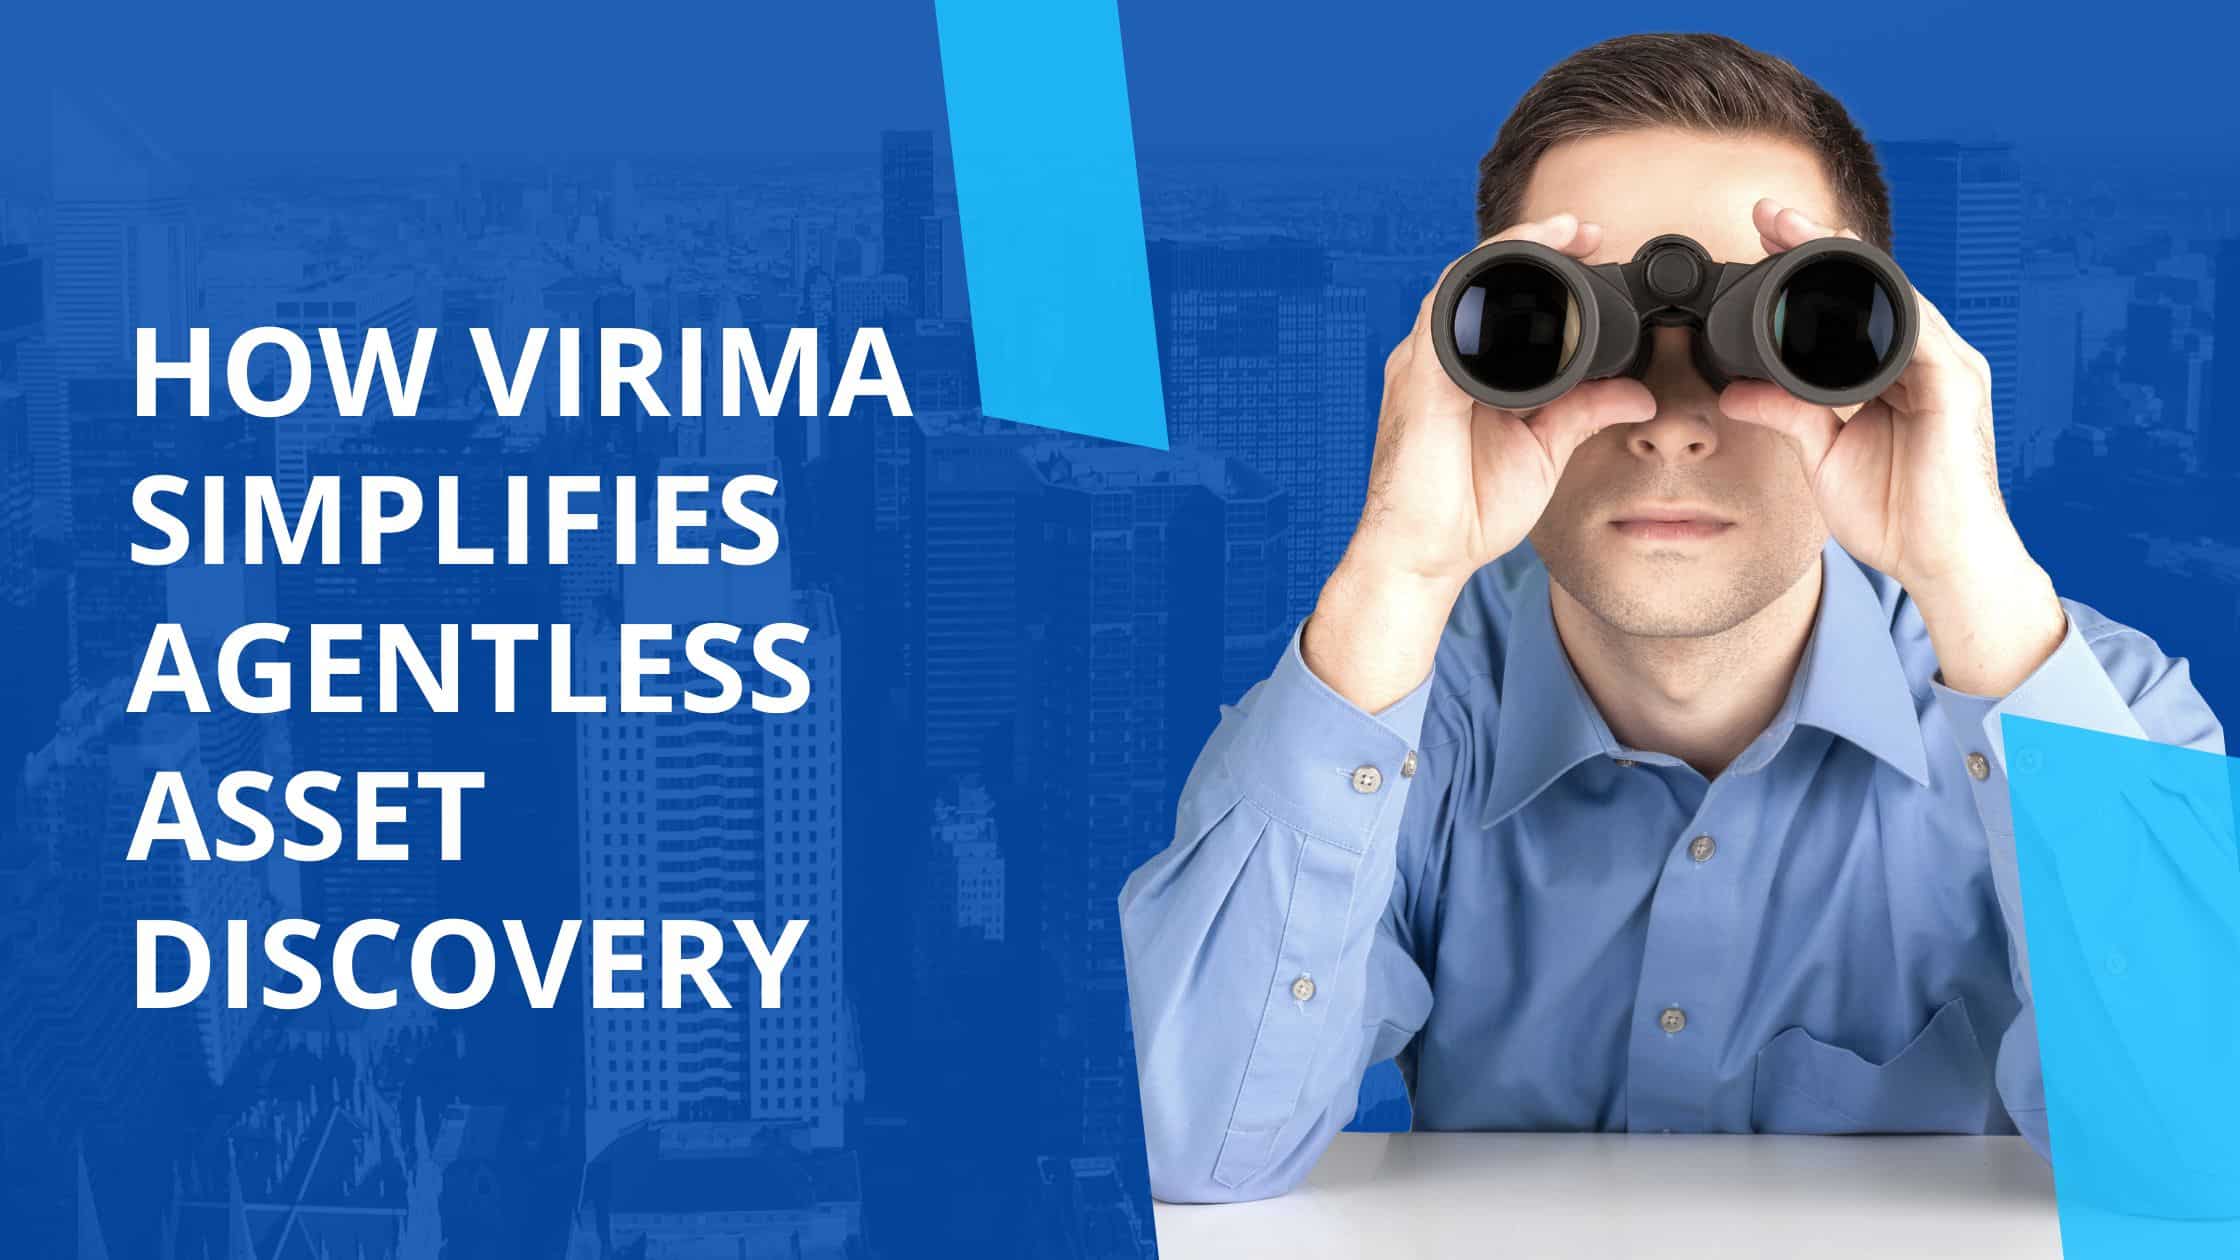 How Virima simplifies agentless asset discovery